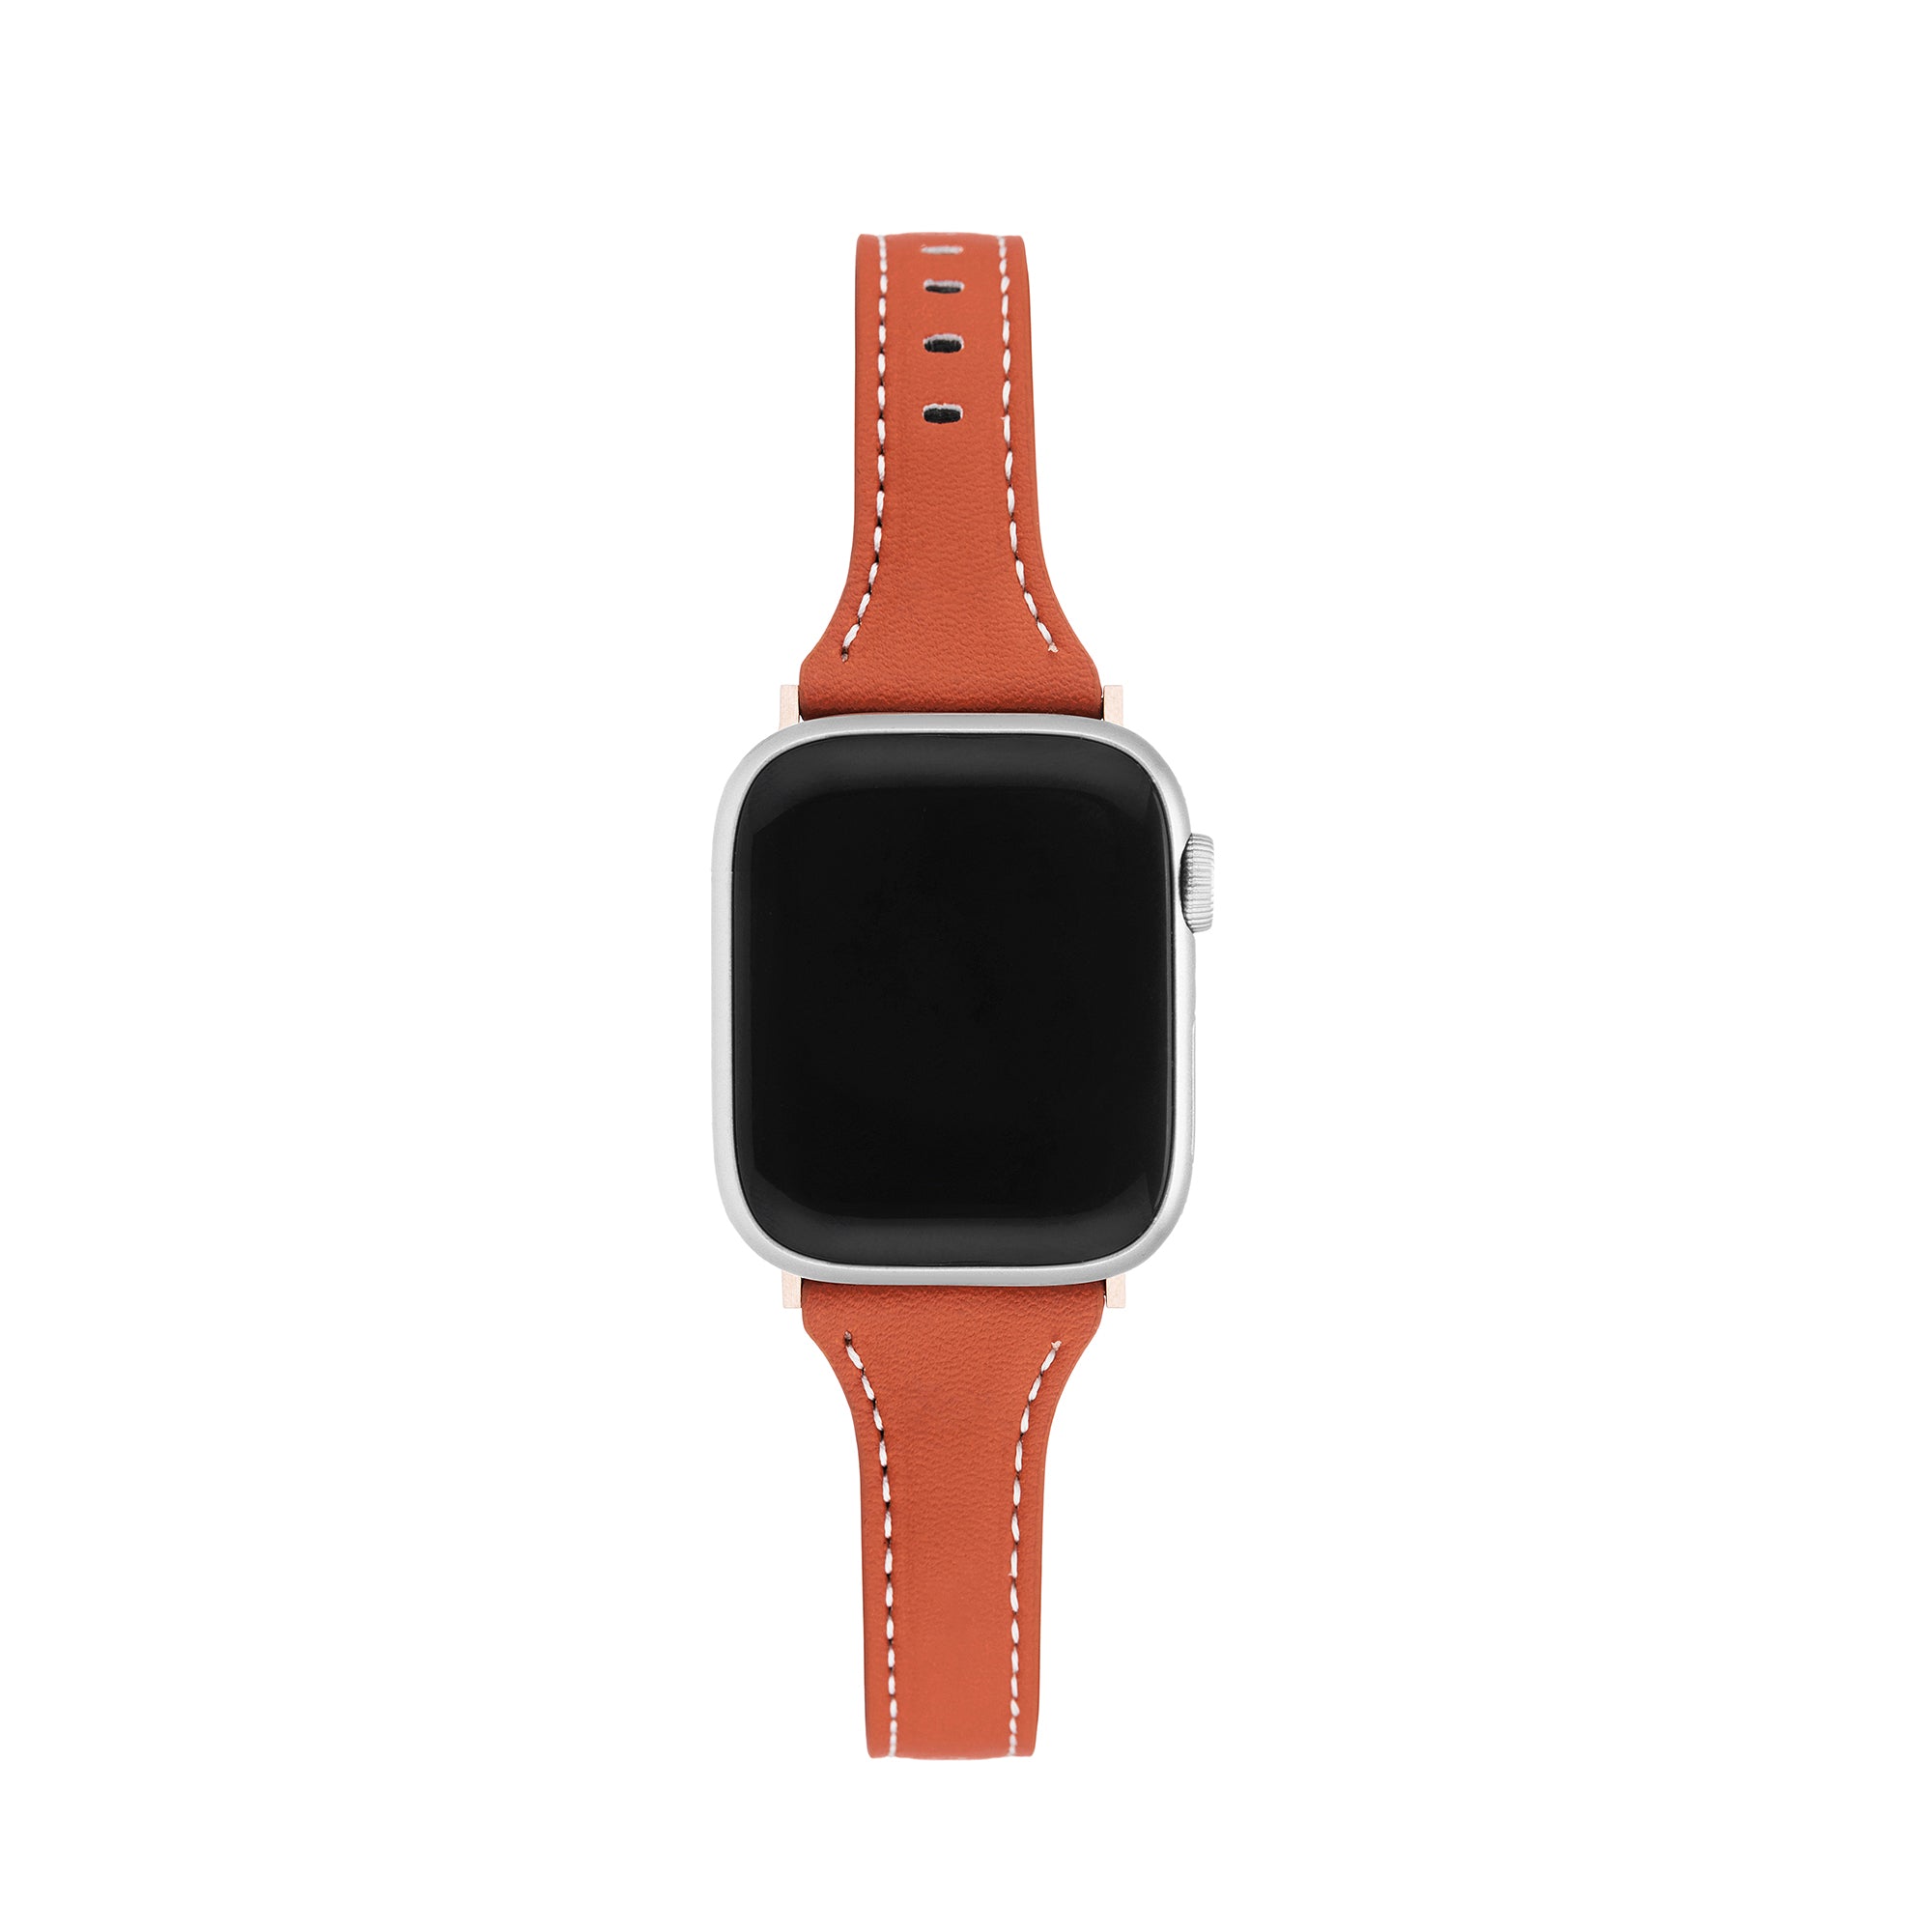 Basic Sporty Apple Watch Band